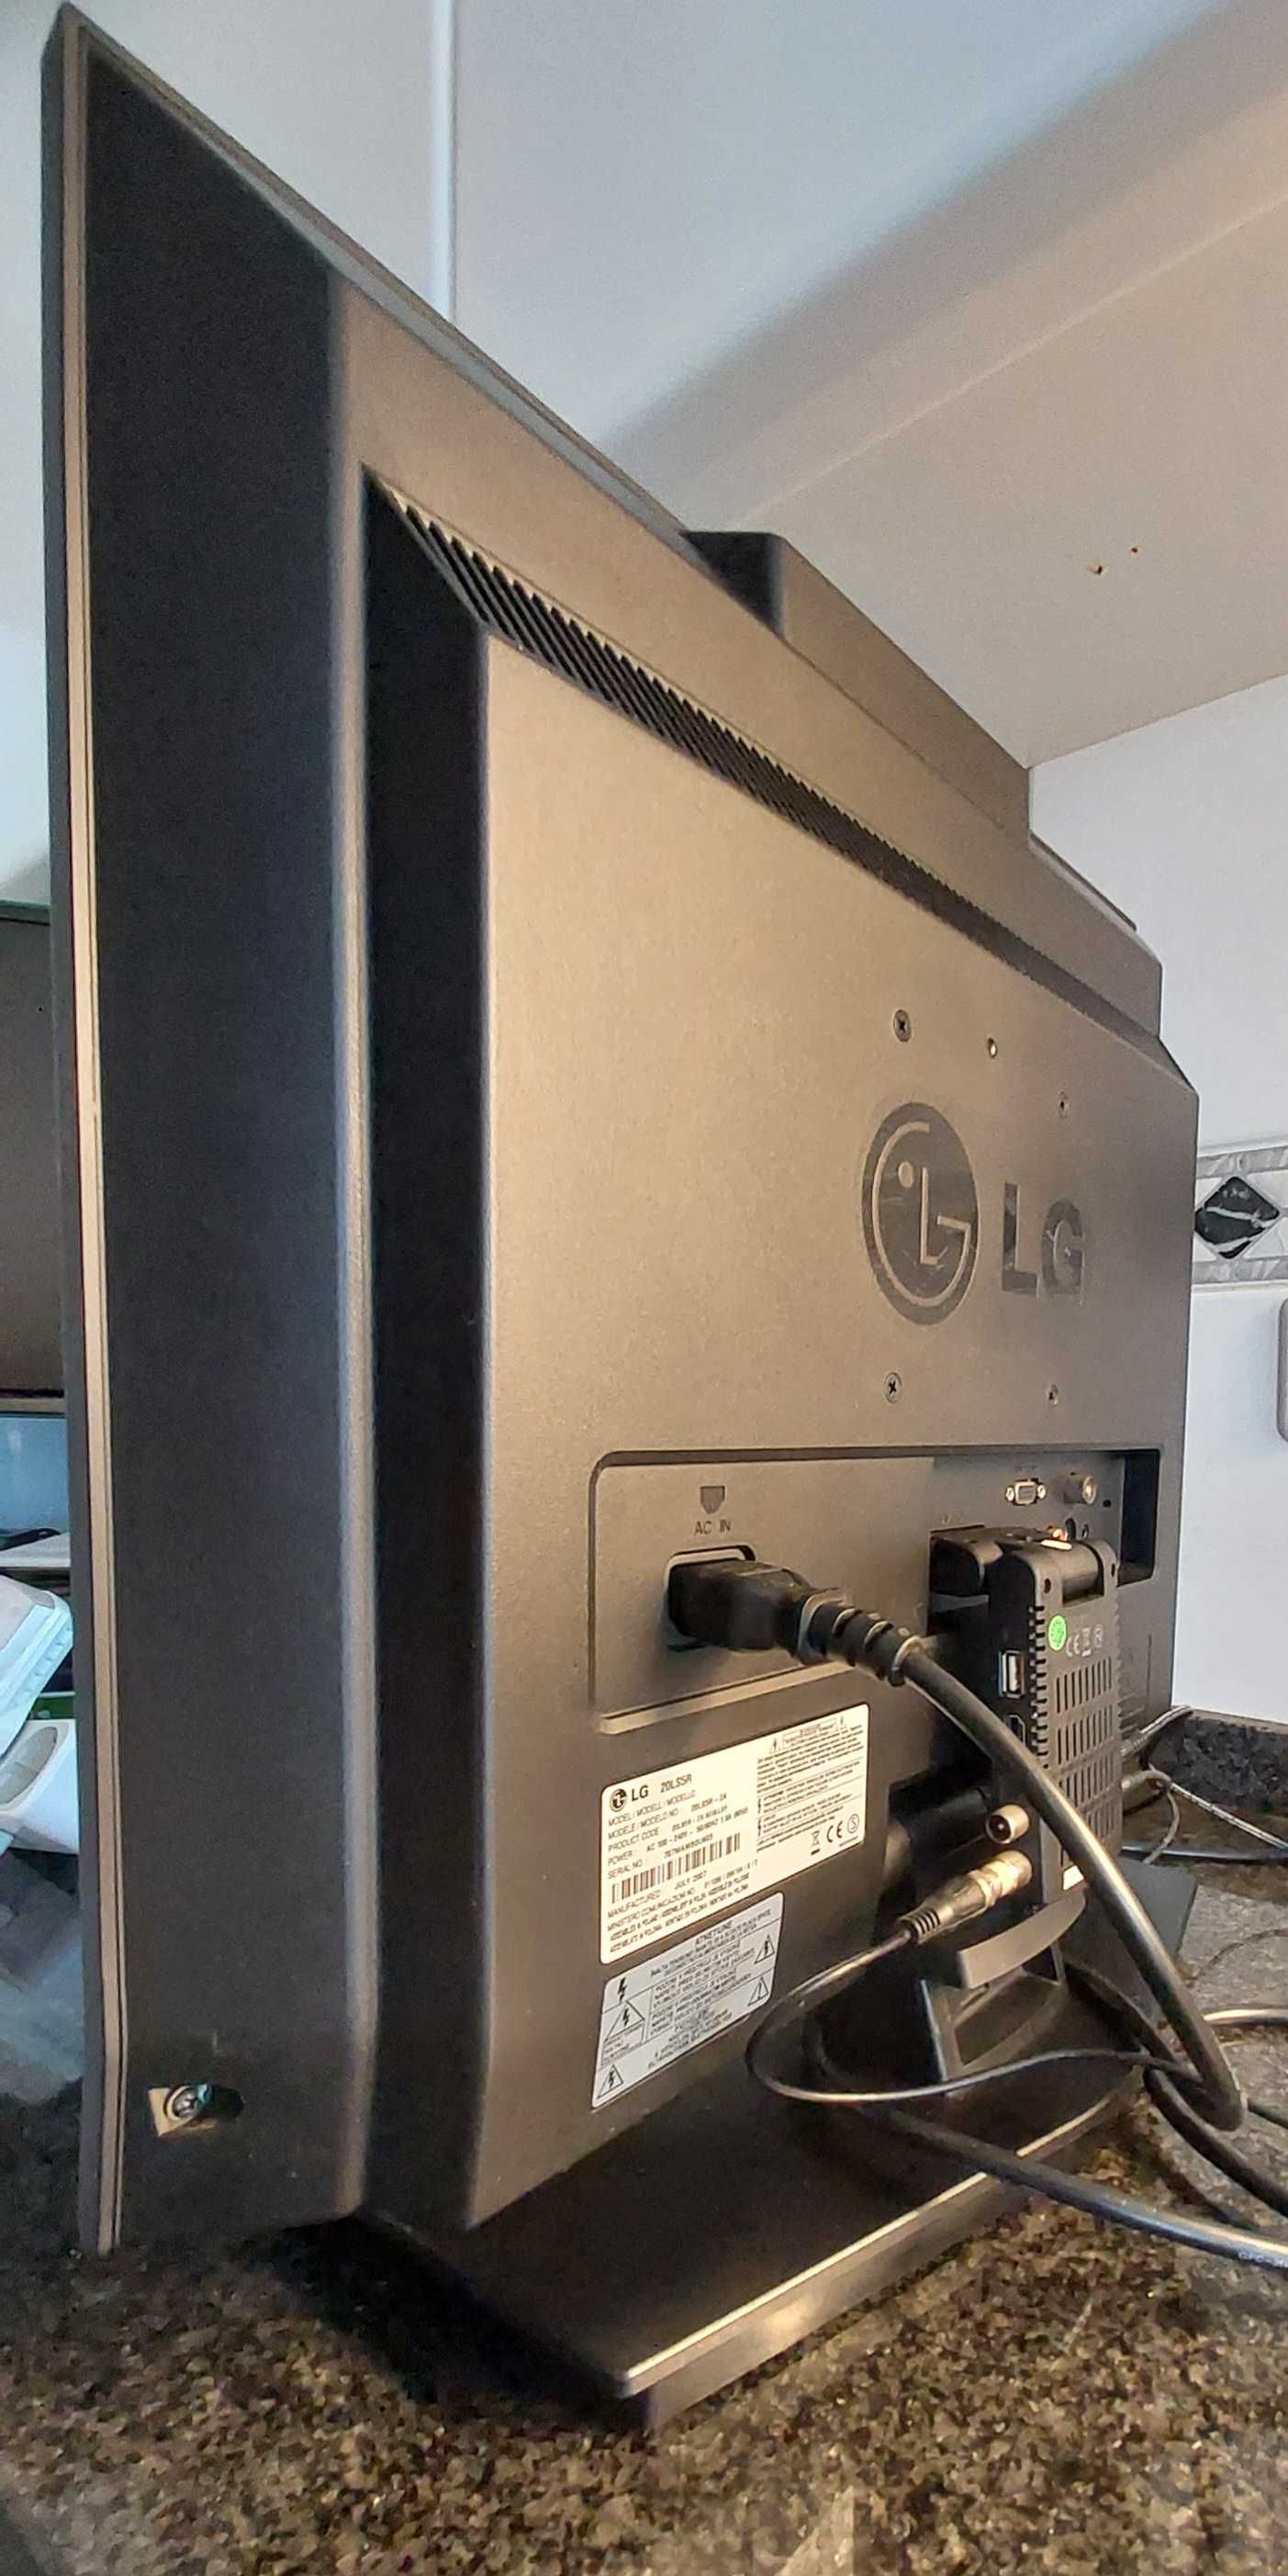 Televisão LCD LG 20LS5R - 51 cm 4:3 + Recetor TDT Sigmatek DVBR-50HD